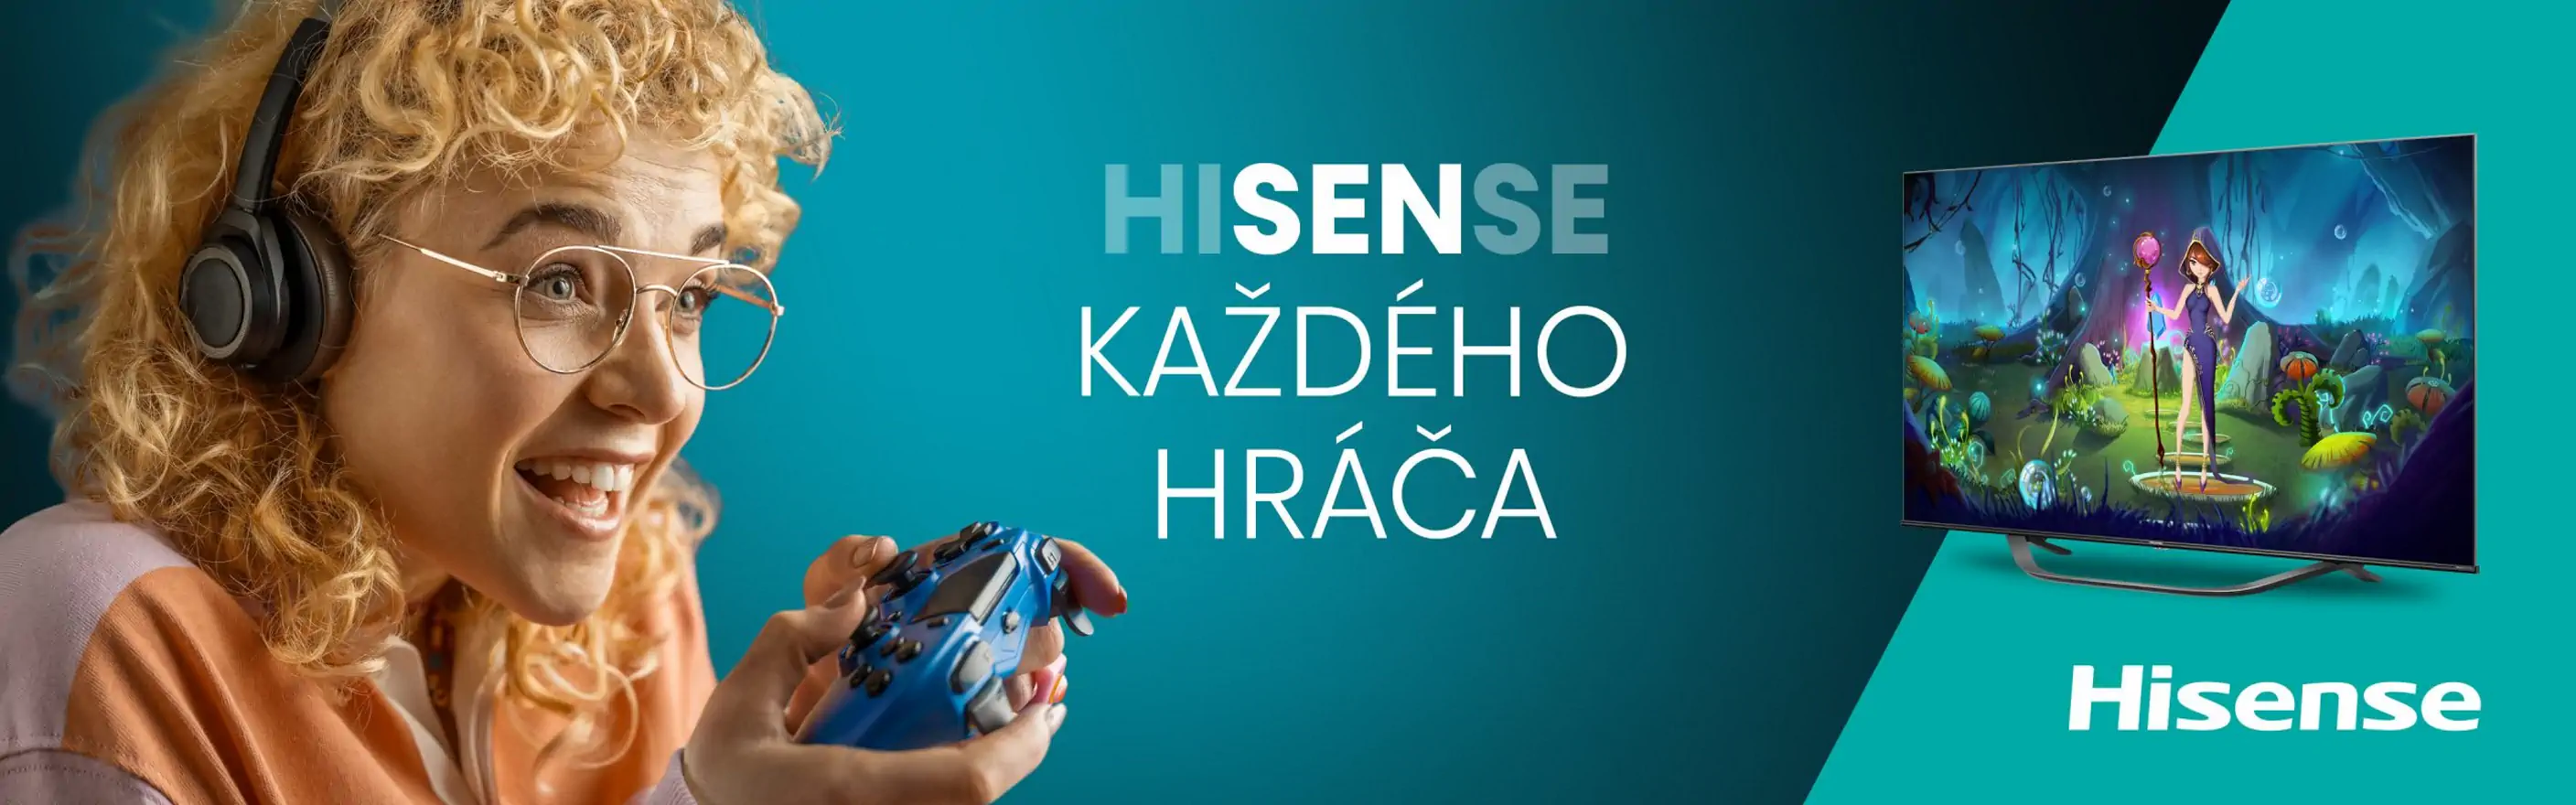 hisense-sen-kazdeho-hraca-lp-desktop-sk-scaled-2816x880.webp